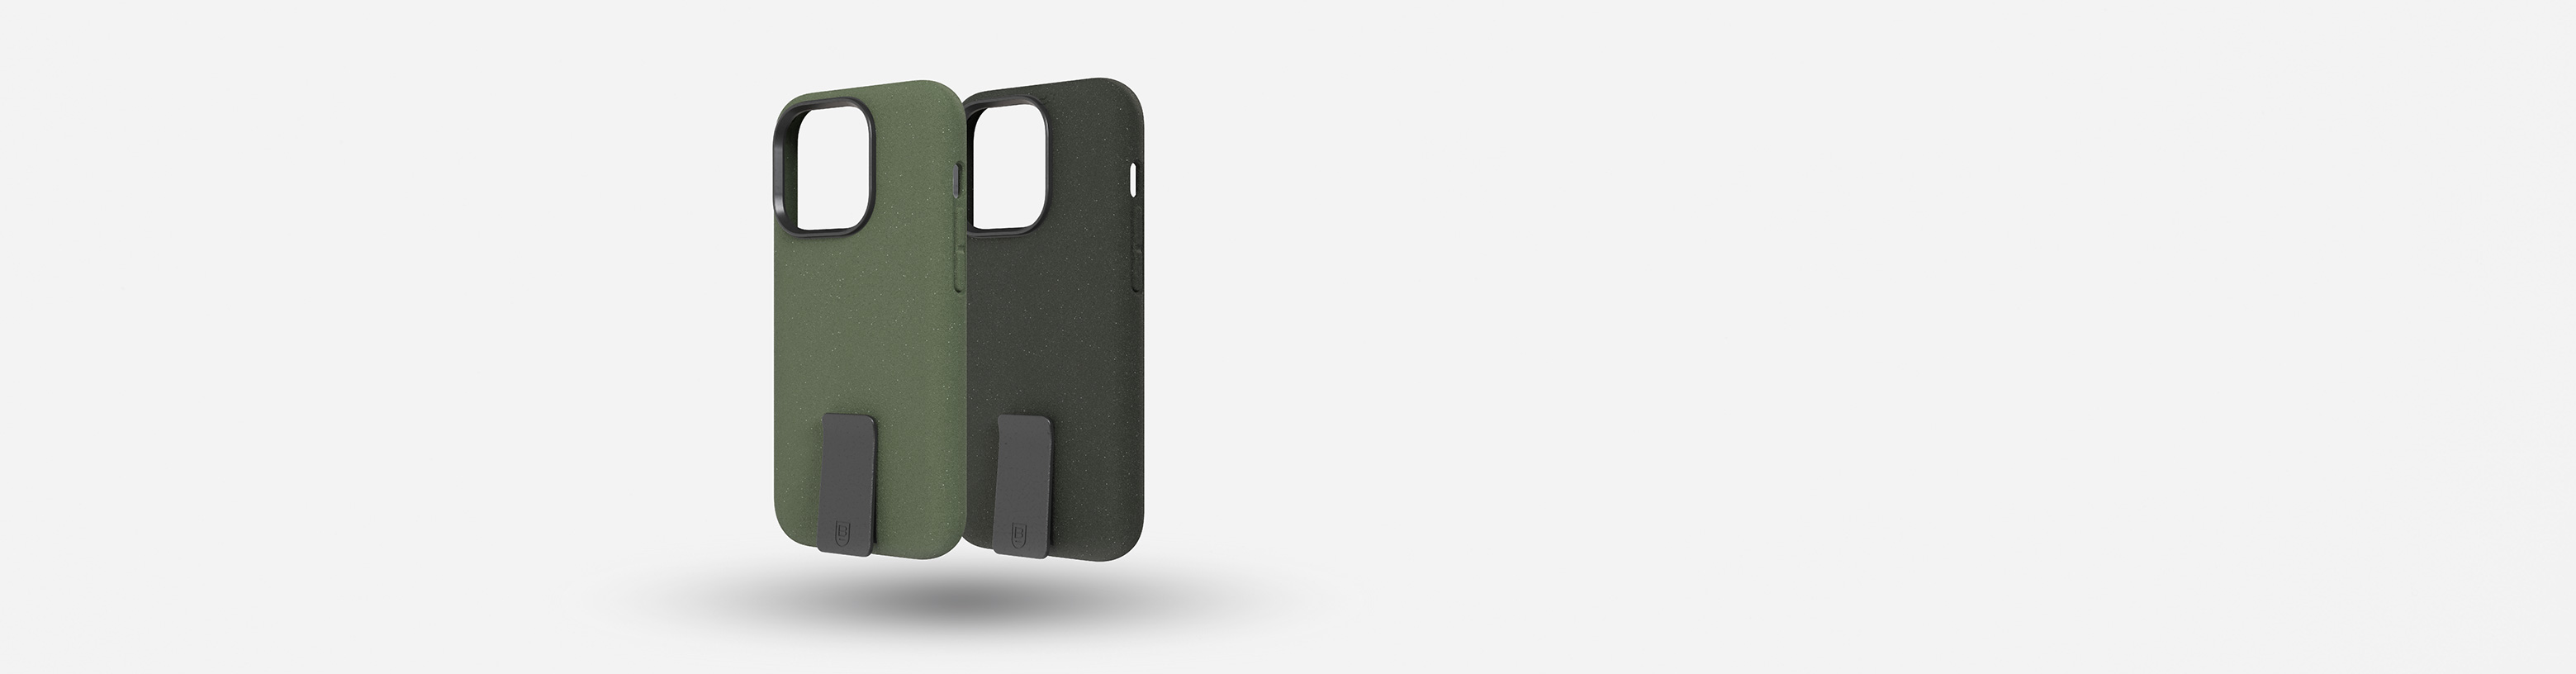 Green and black Motus phone cases.